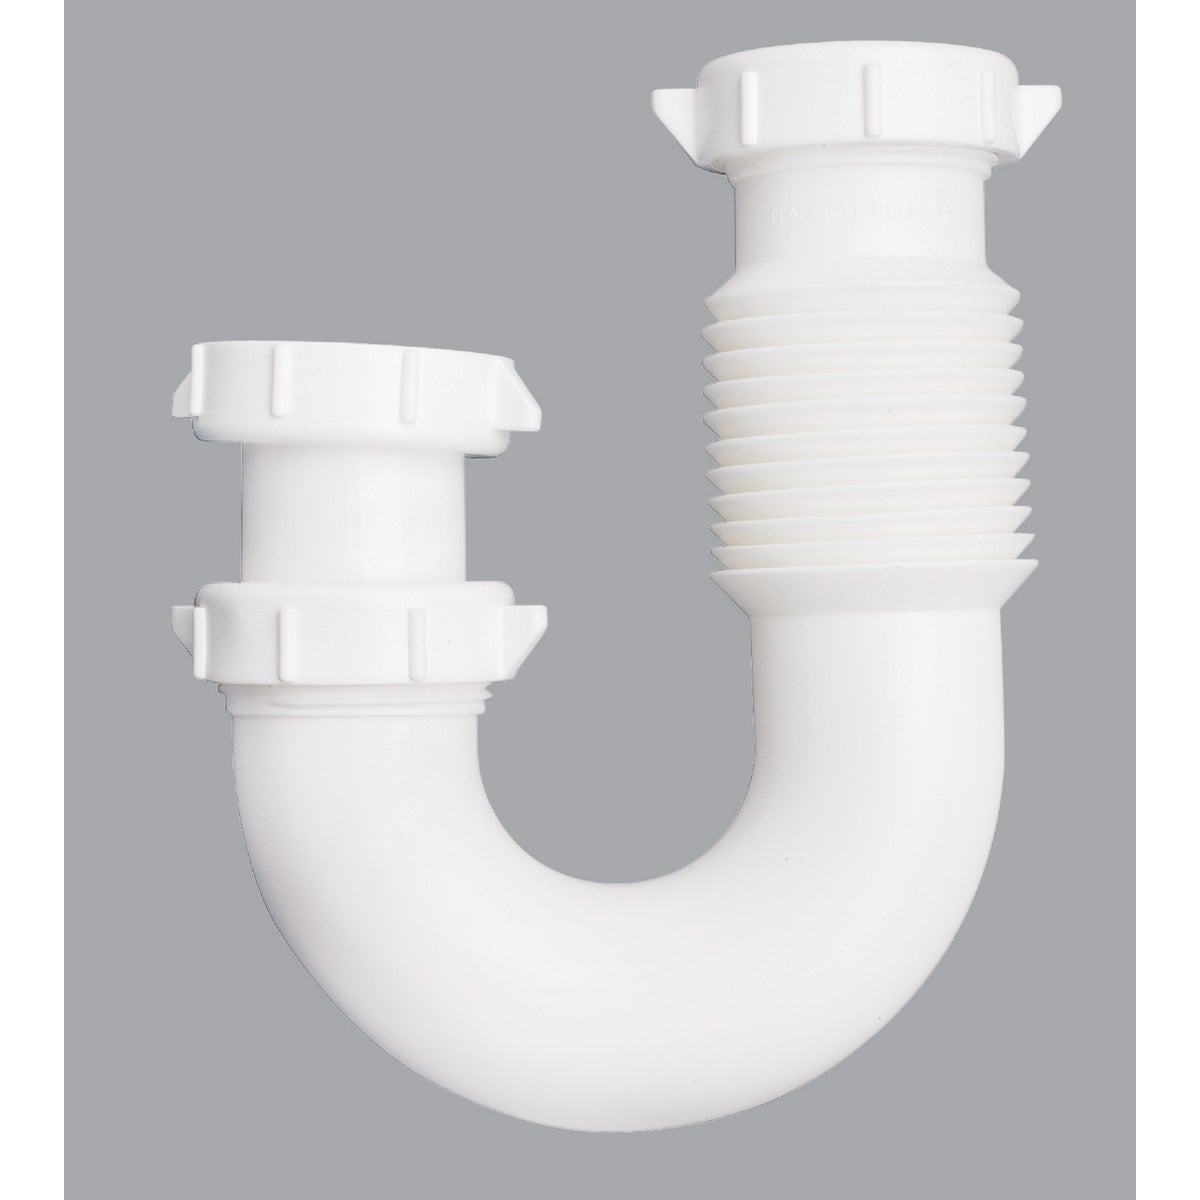 Item 400168, Plastic tubular flexible/expandable, replaces 1 1/2" or 1 1/4" J-Bends.